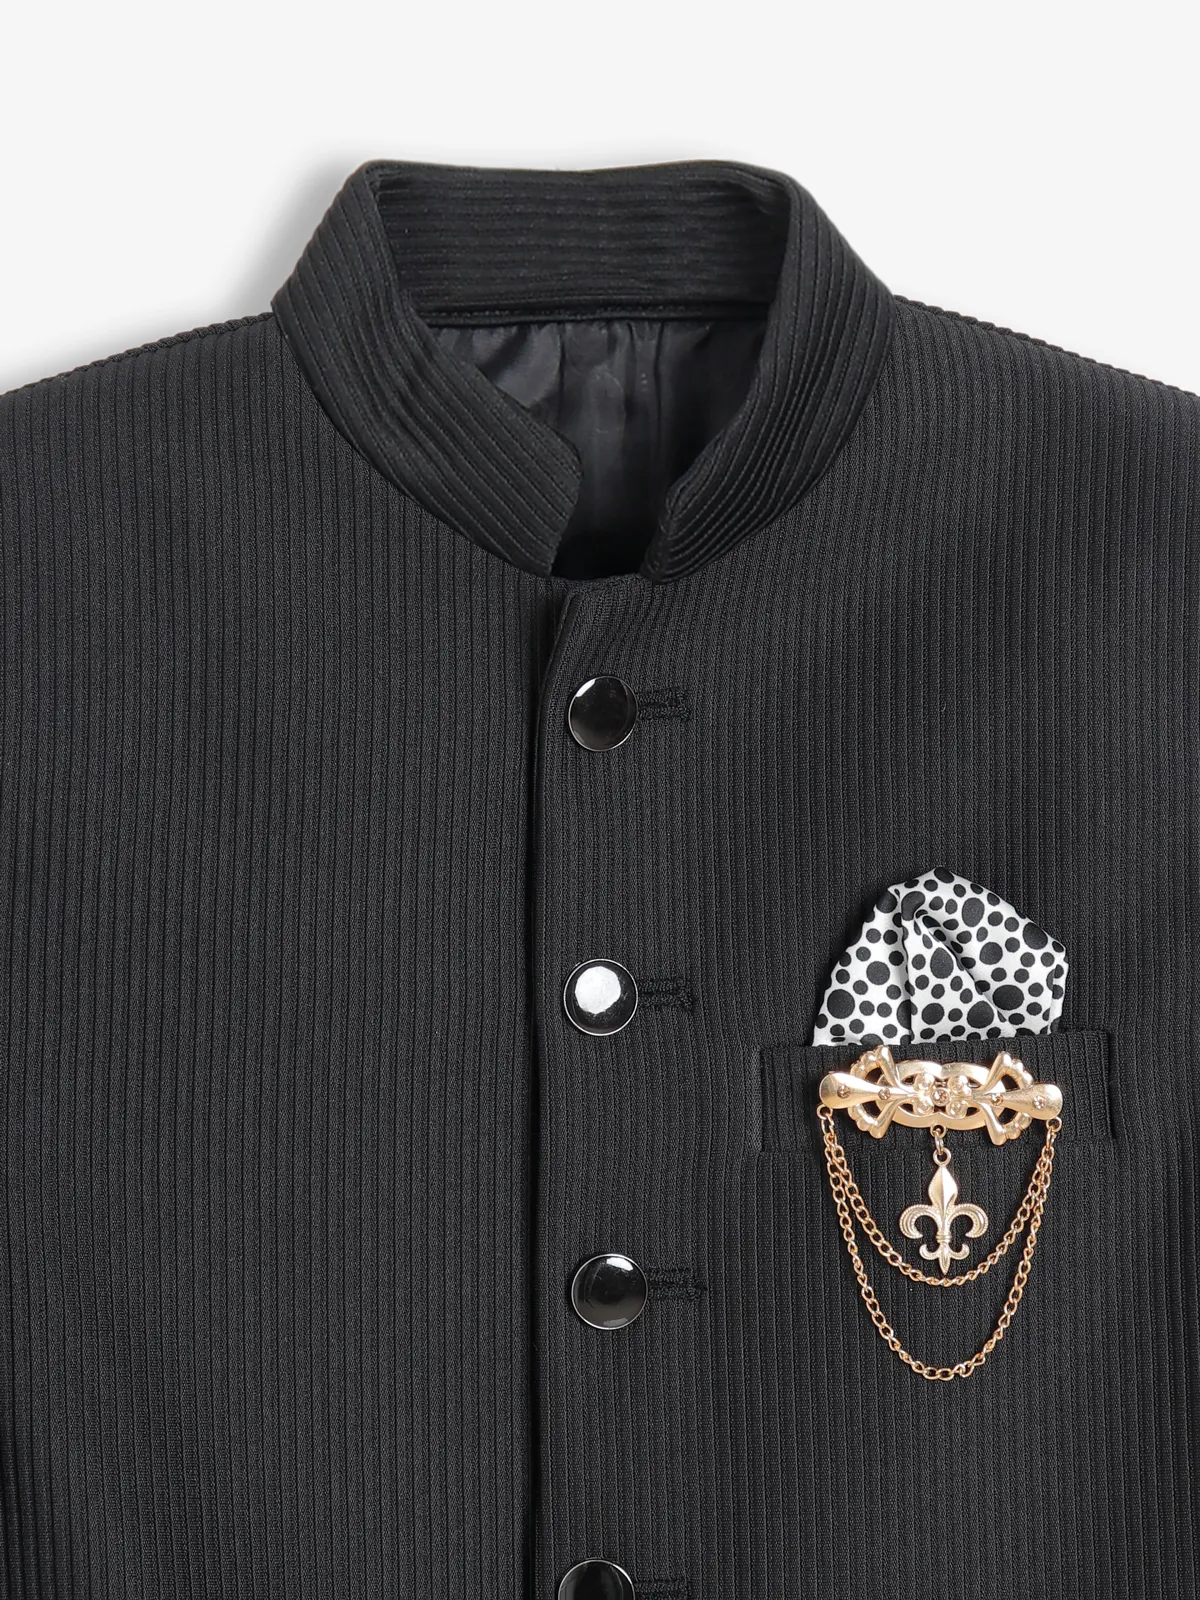 Stylish black terry rayon jodhpuri suit